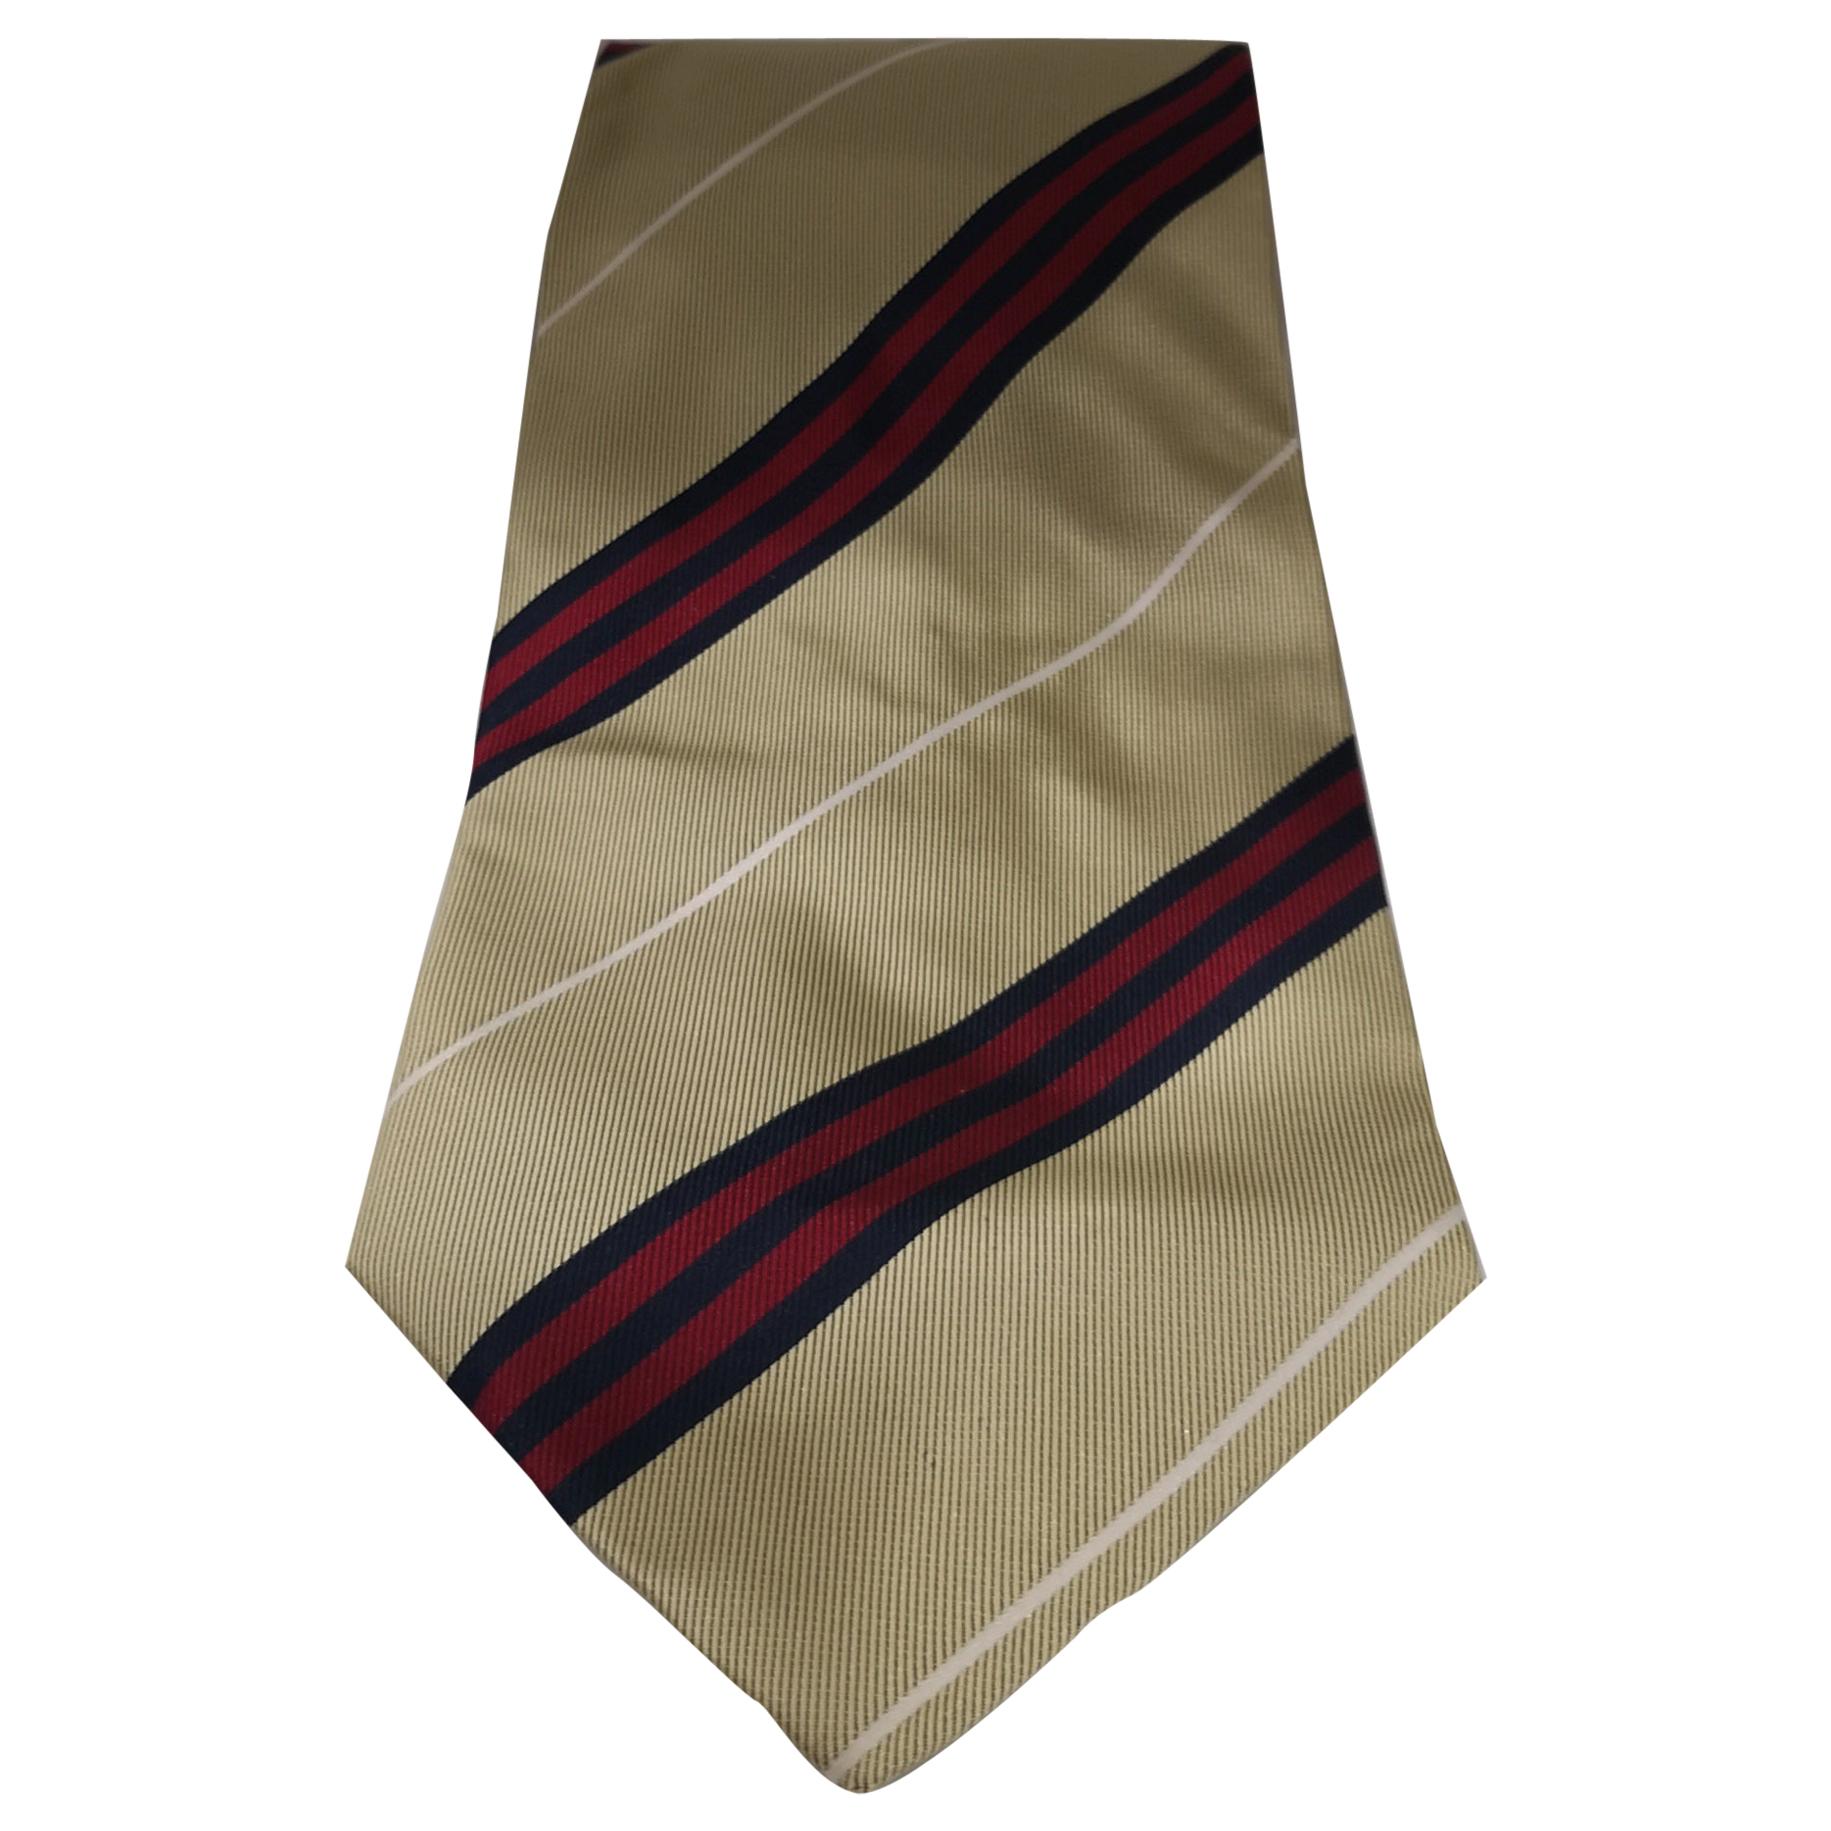 Thomas multicoloured silk tie